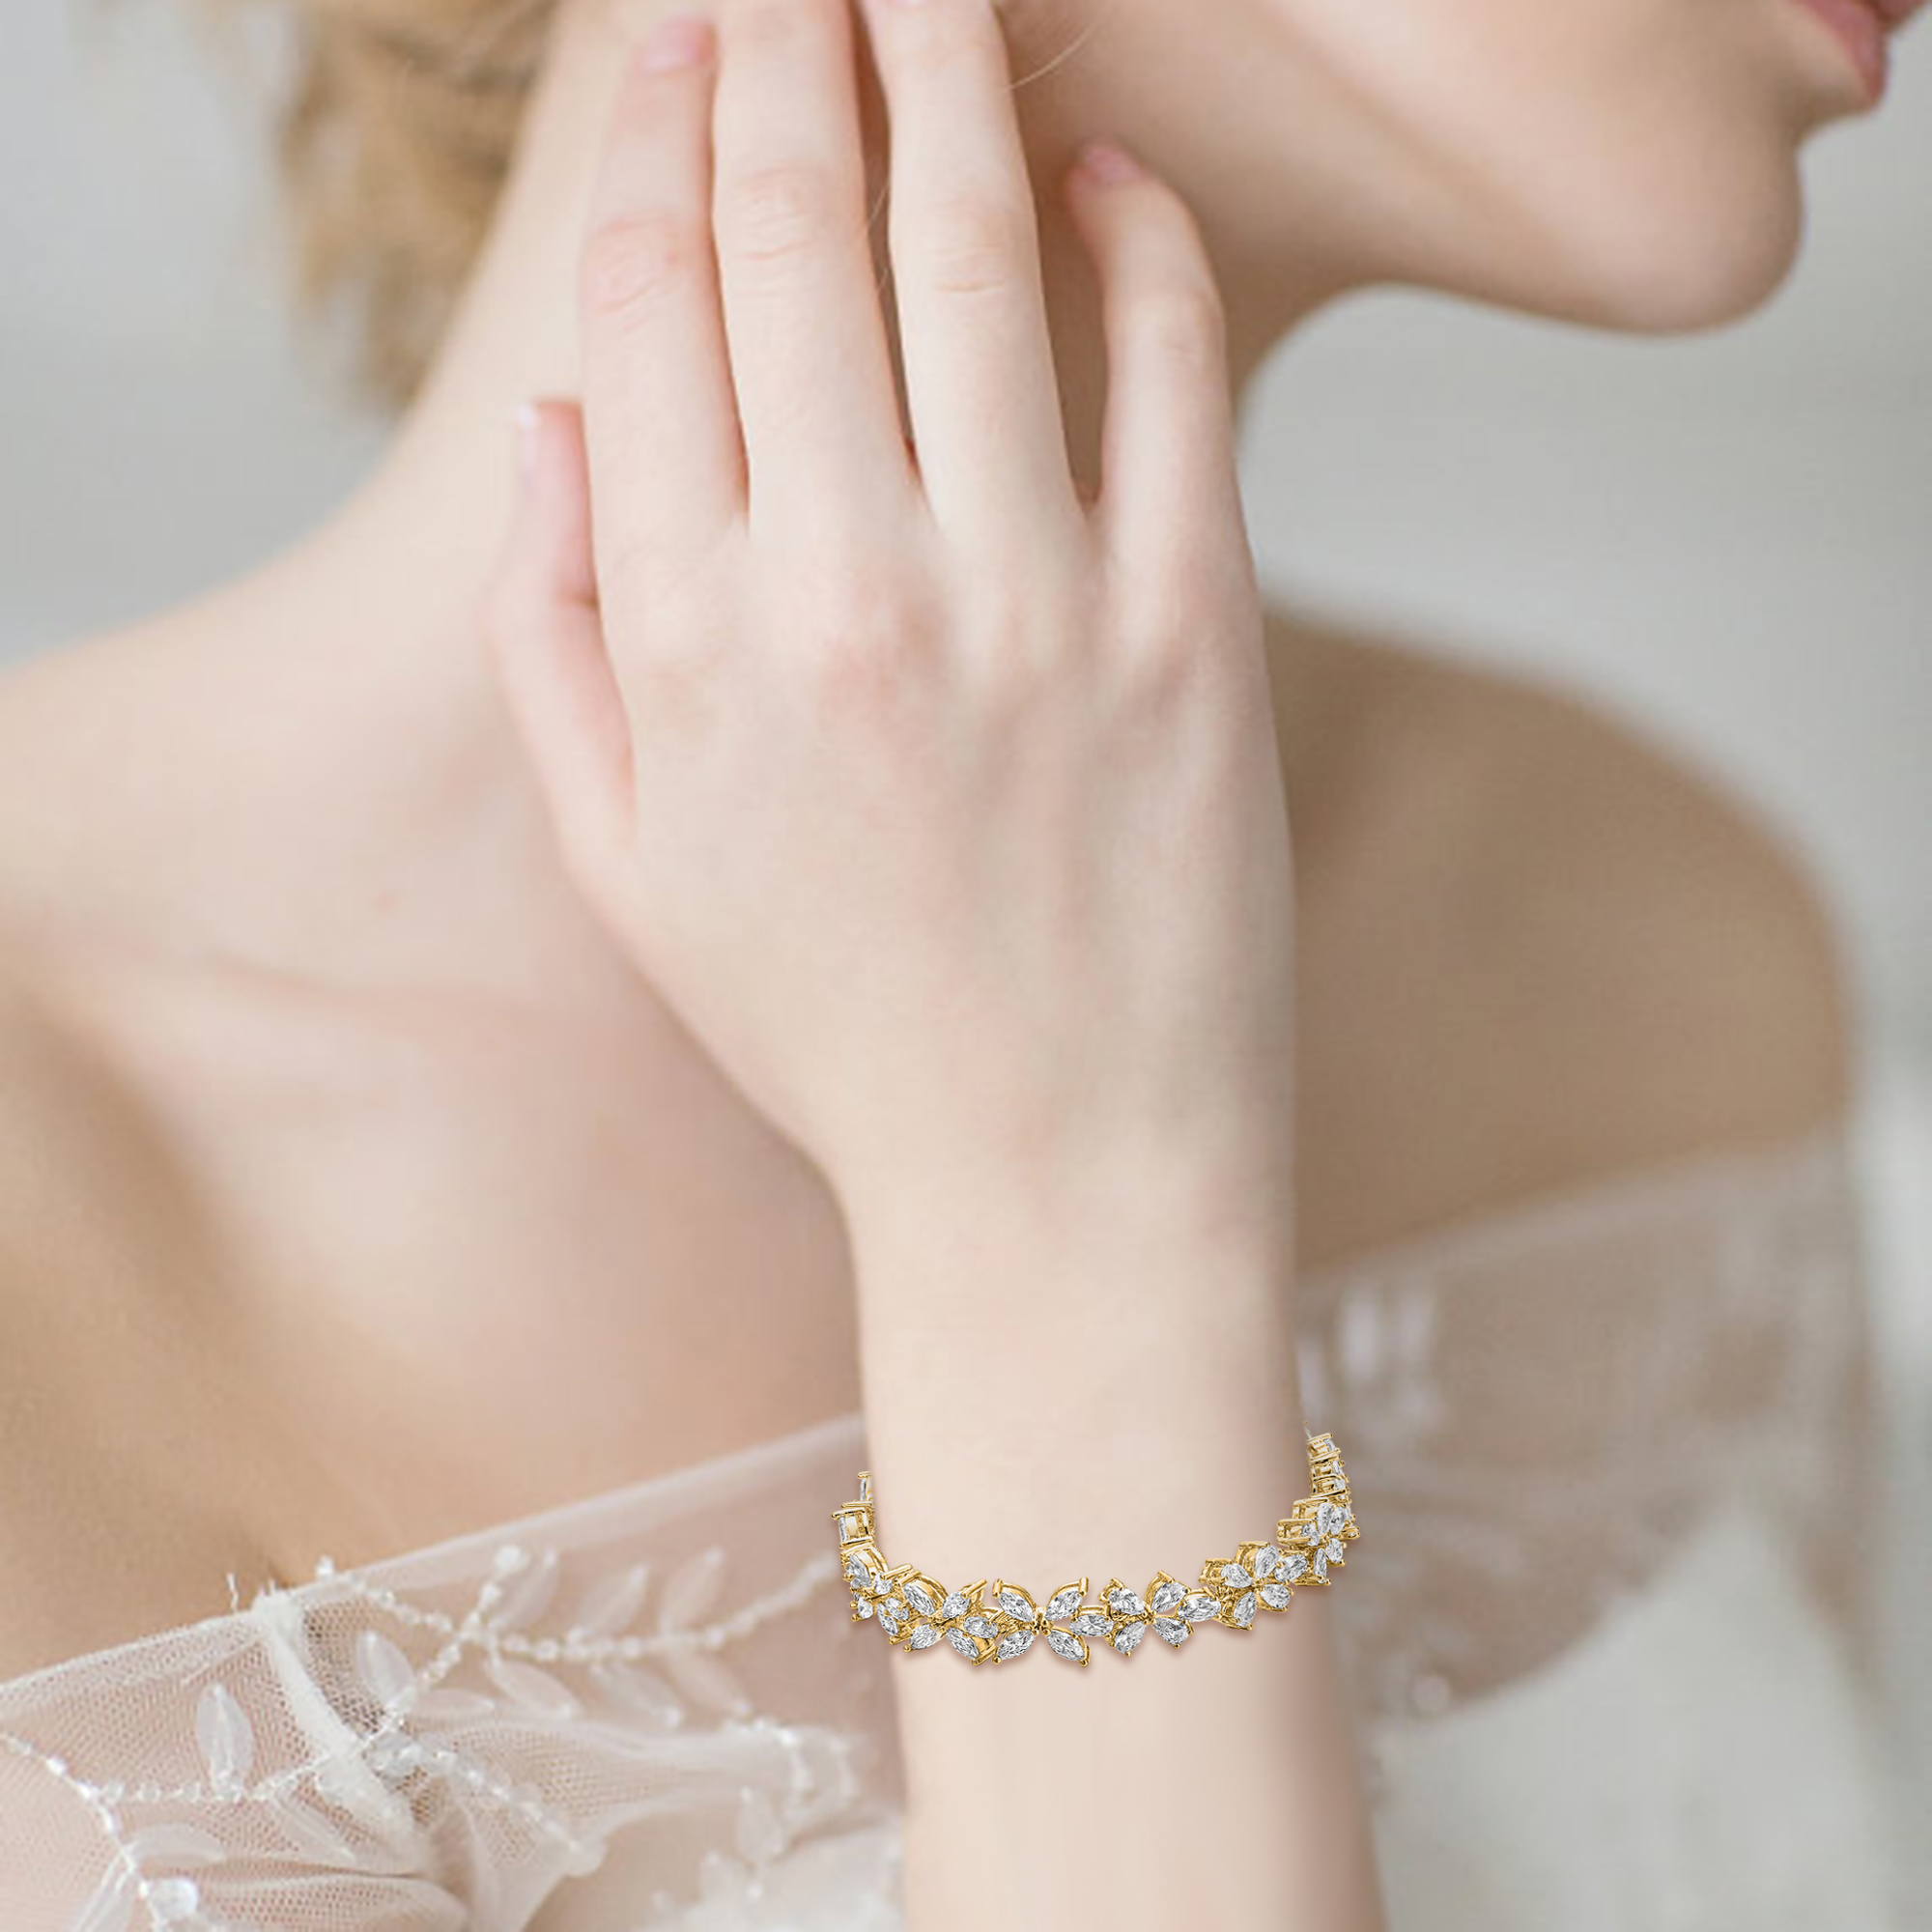 Wedure Wedding Jewelry Sets for Bridal,14K Gold Plated Flower Leaf Teardrop Cubic Zirconia Necklace Dangle Earrings Bracelet Set for Women Bridesmaid - image 3 of 5